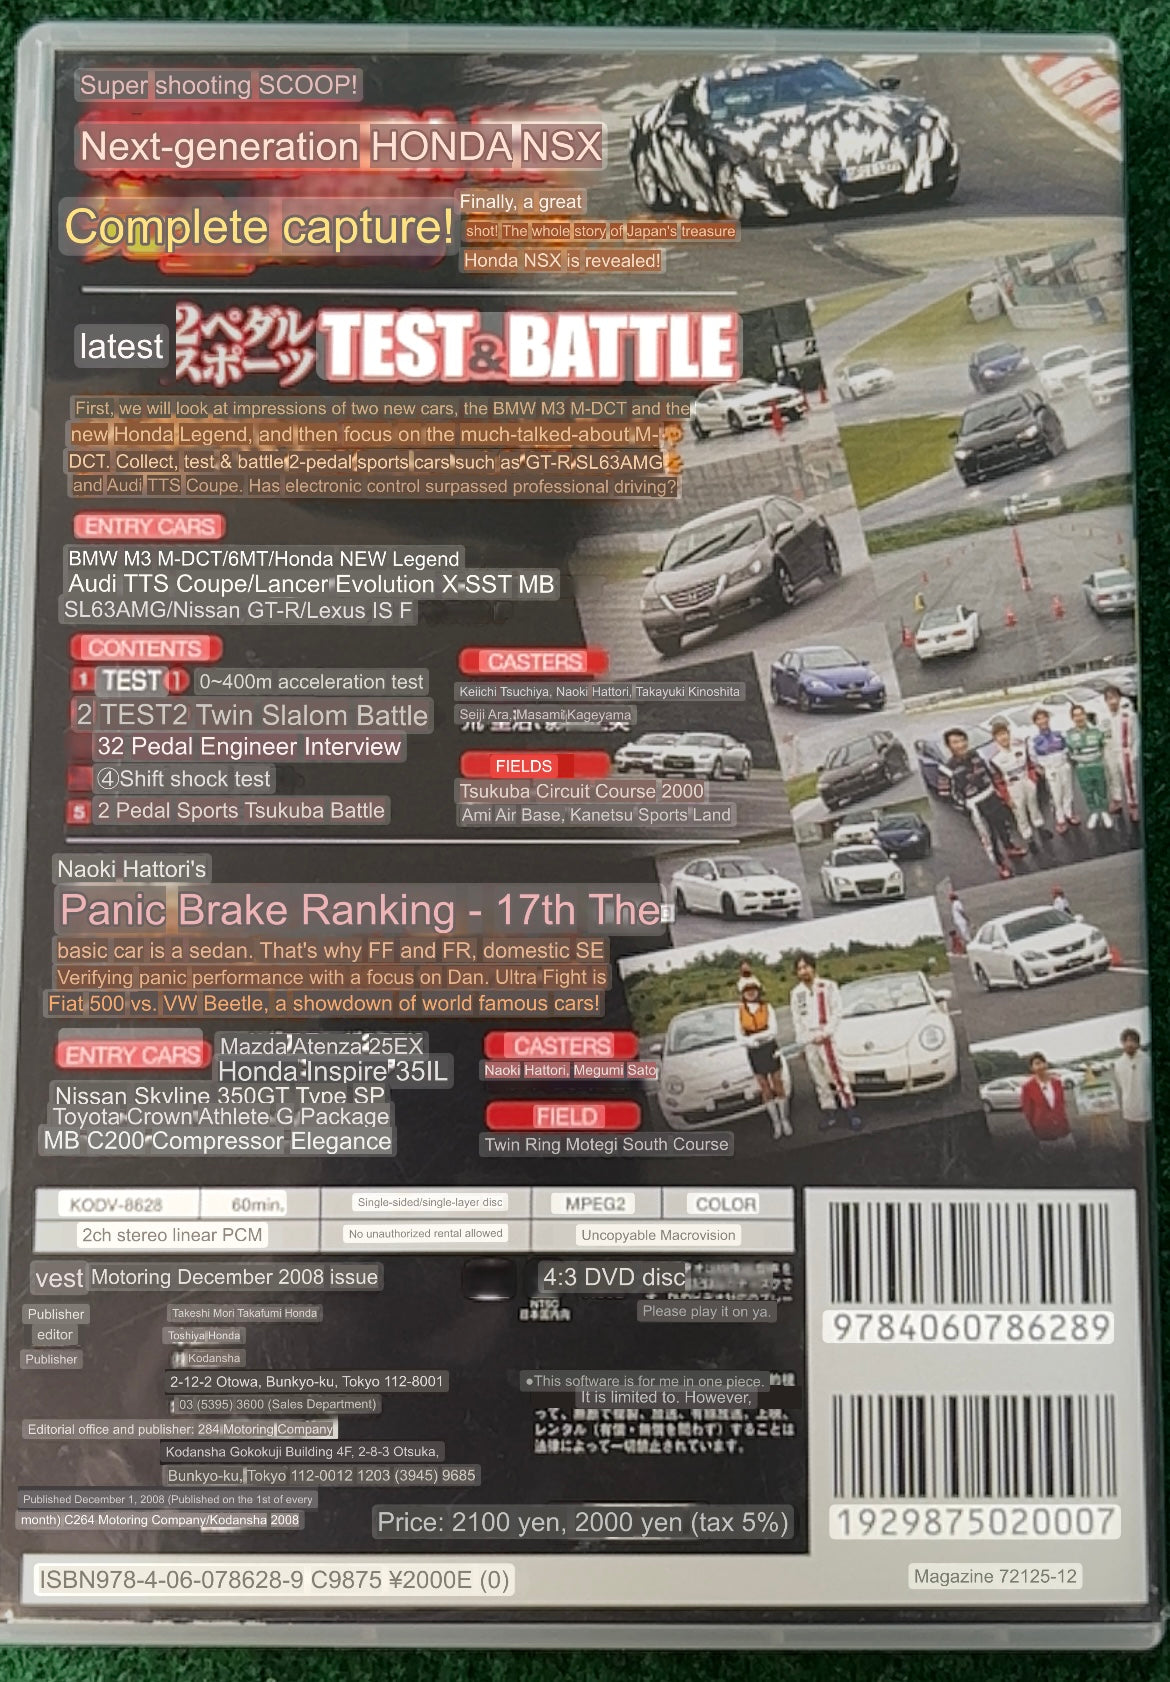 Best Motoring DVD - December 2008